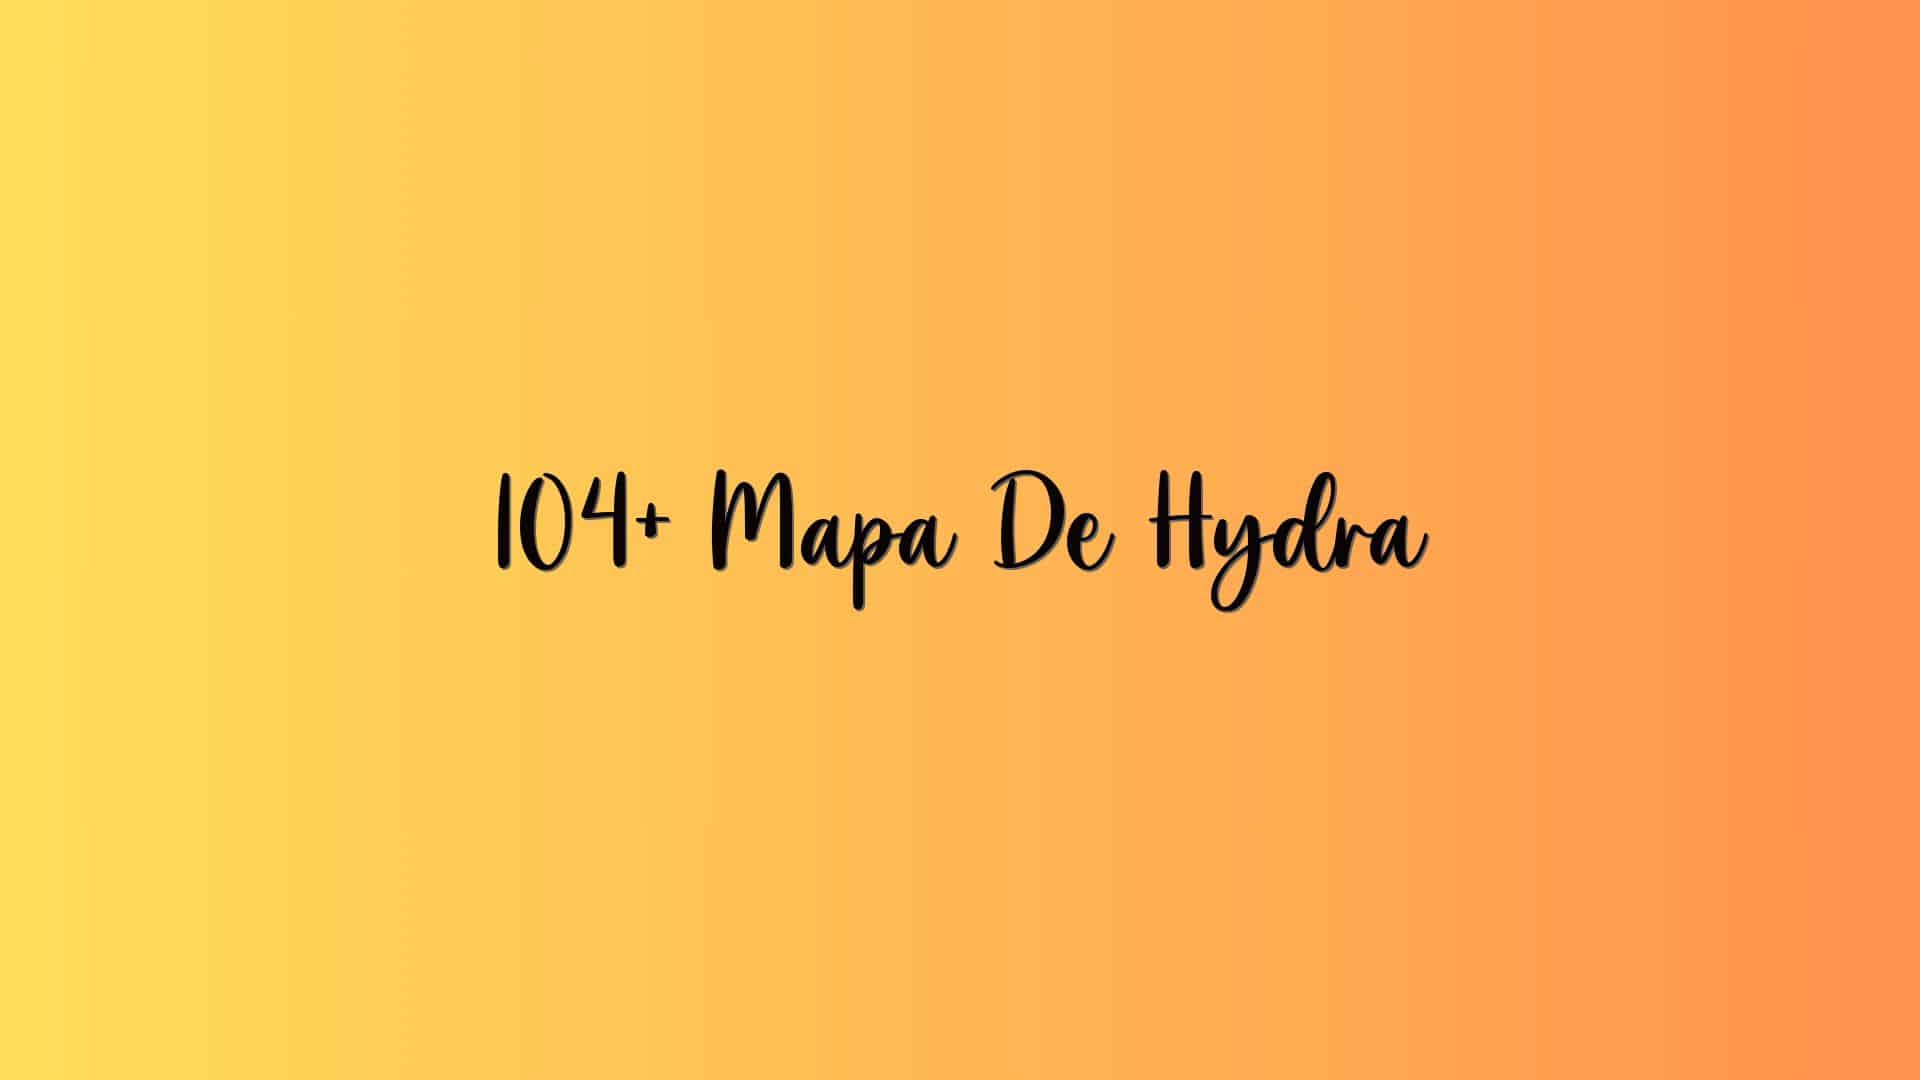 104+ Mapa De Hydra